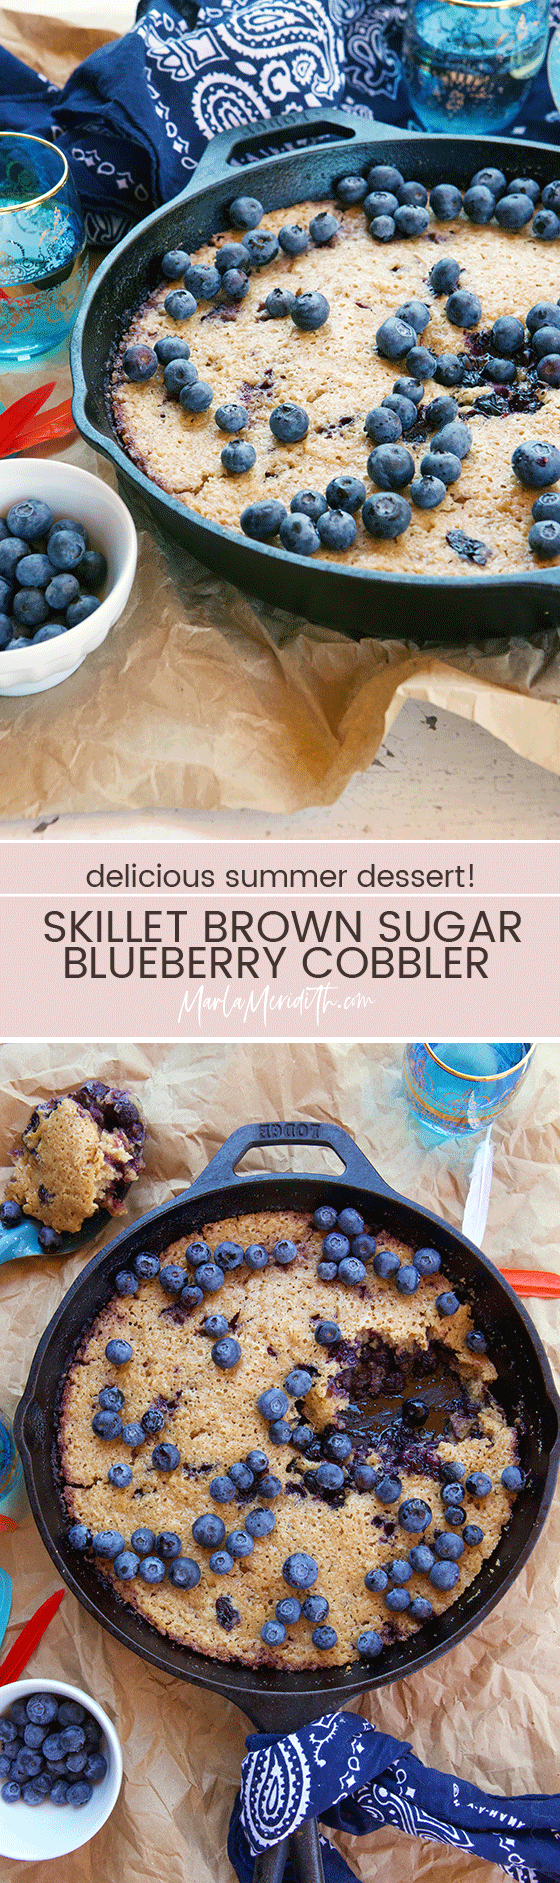 Skillet Brown Sugar Blueberry Cobbler recipe